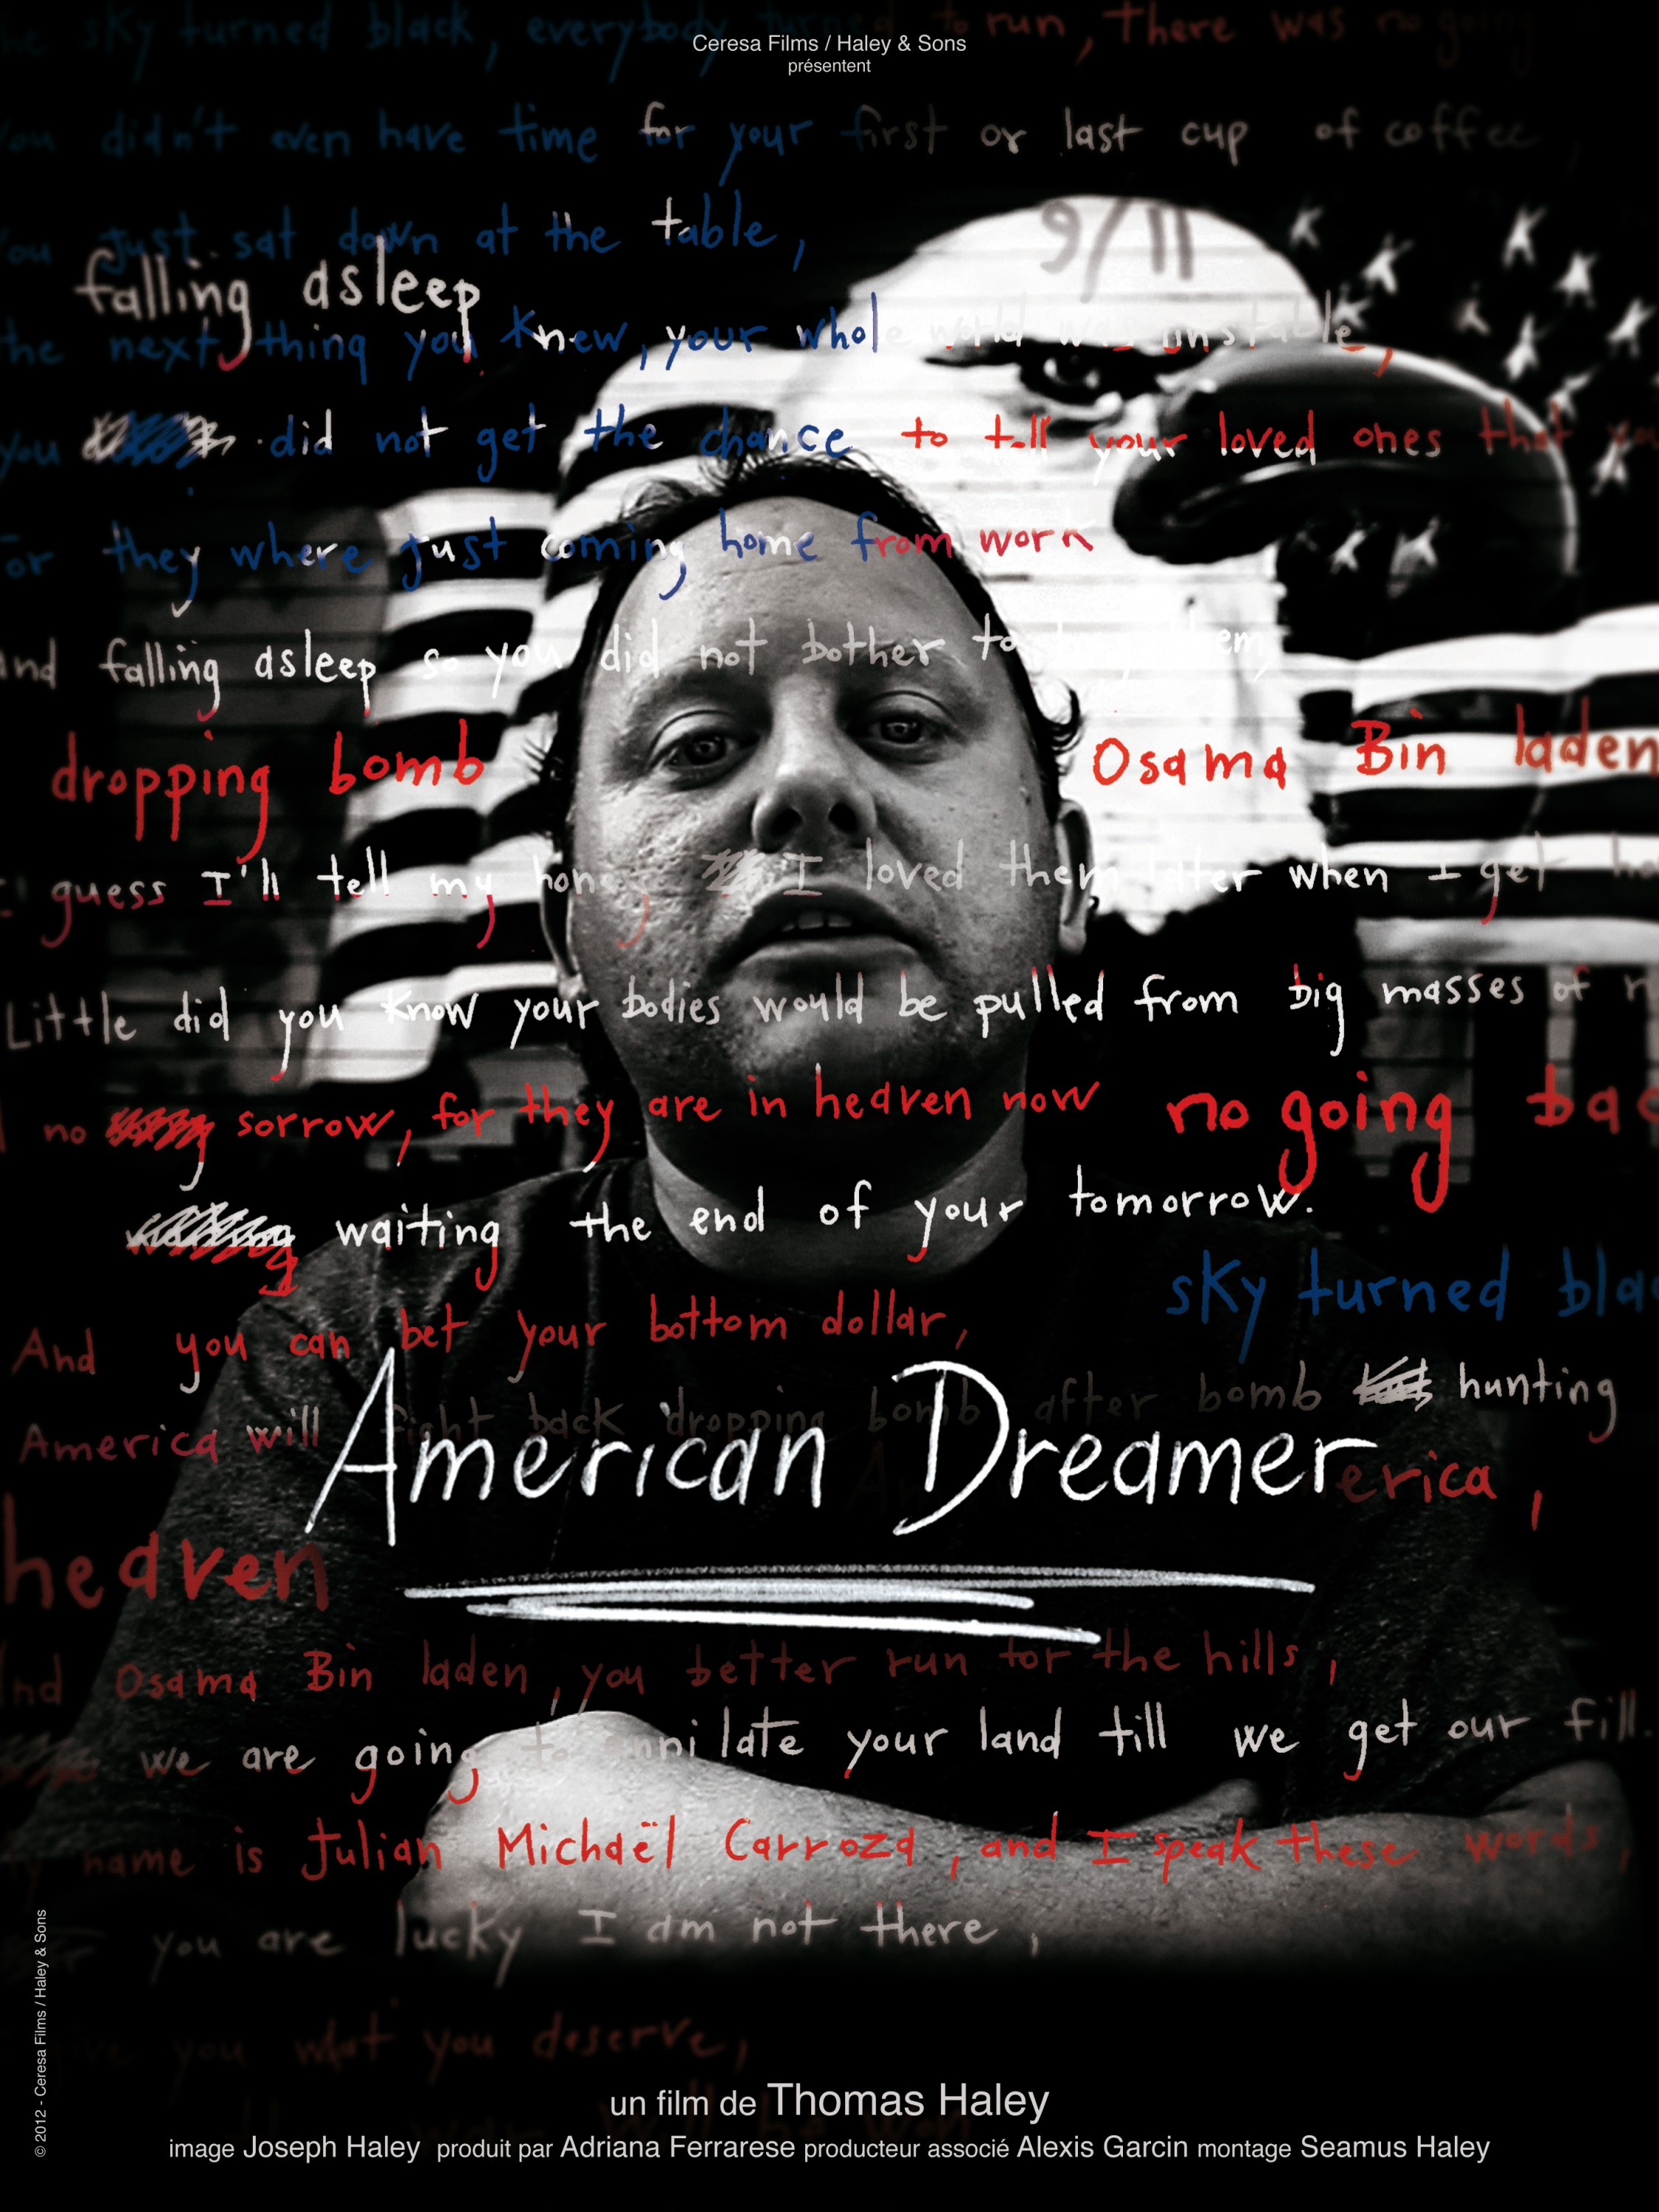 Mega Sized Movie Poster Image for American Dreamer